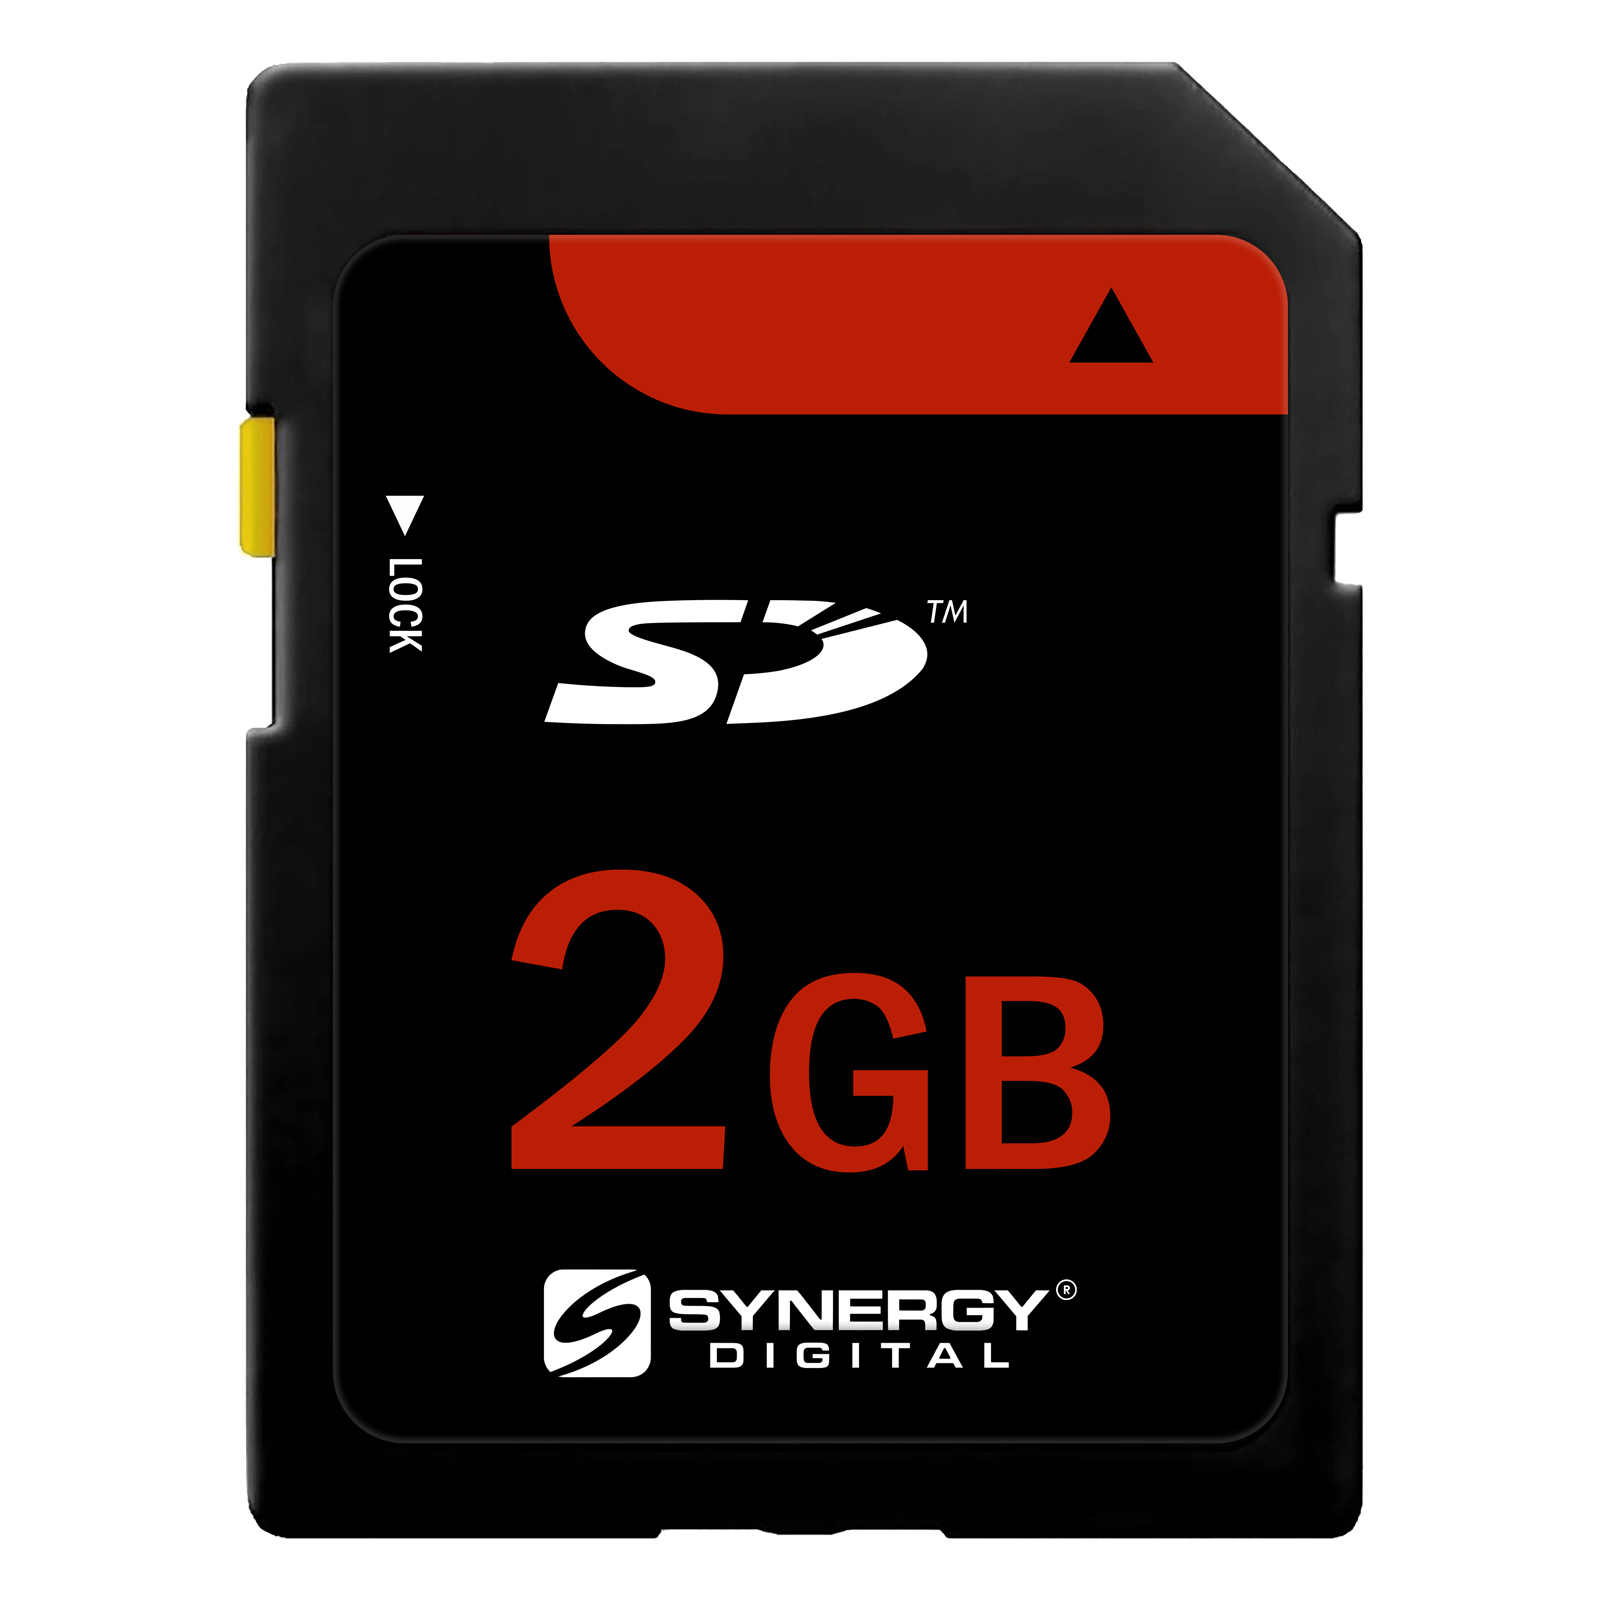 2GB Standard Secure Digital (SD) Memory Card